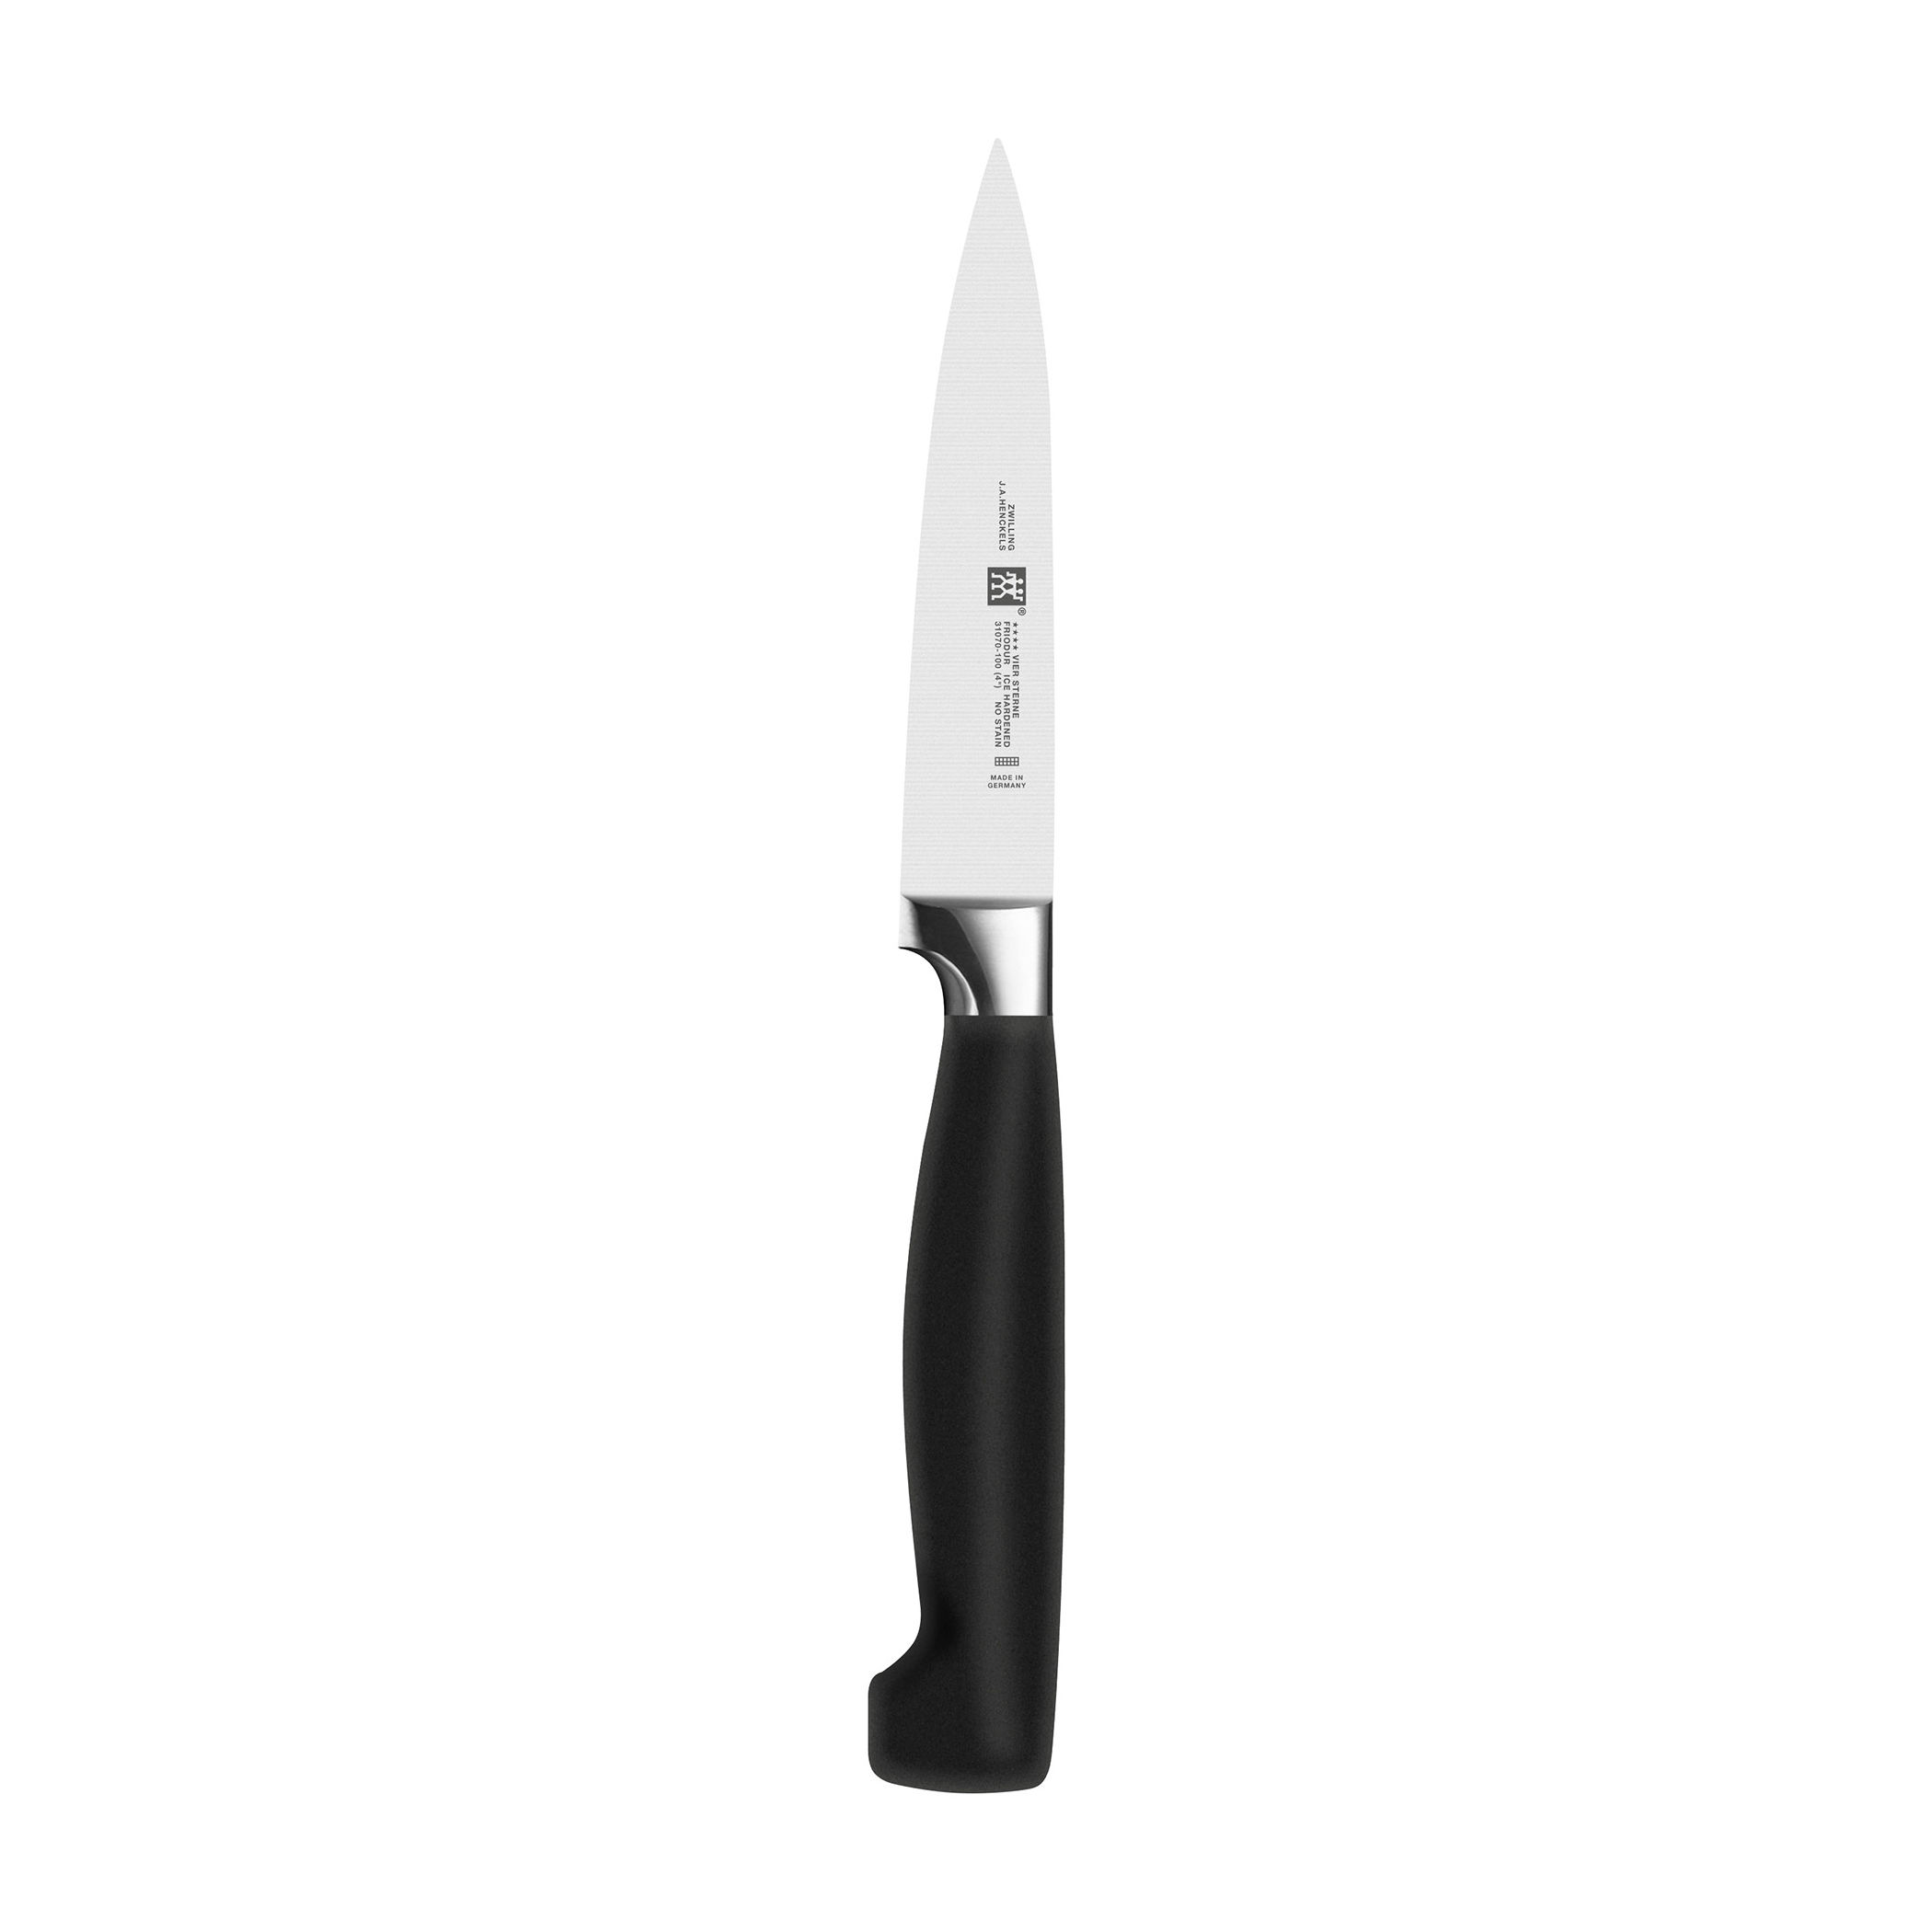 Table Knife Set 4/6/8Pcs Black Matte Comfort Handle Paring Knives German  Stainless Steel Serrated Non Stick Steak Knives Set